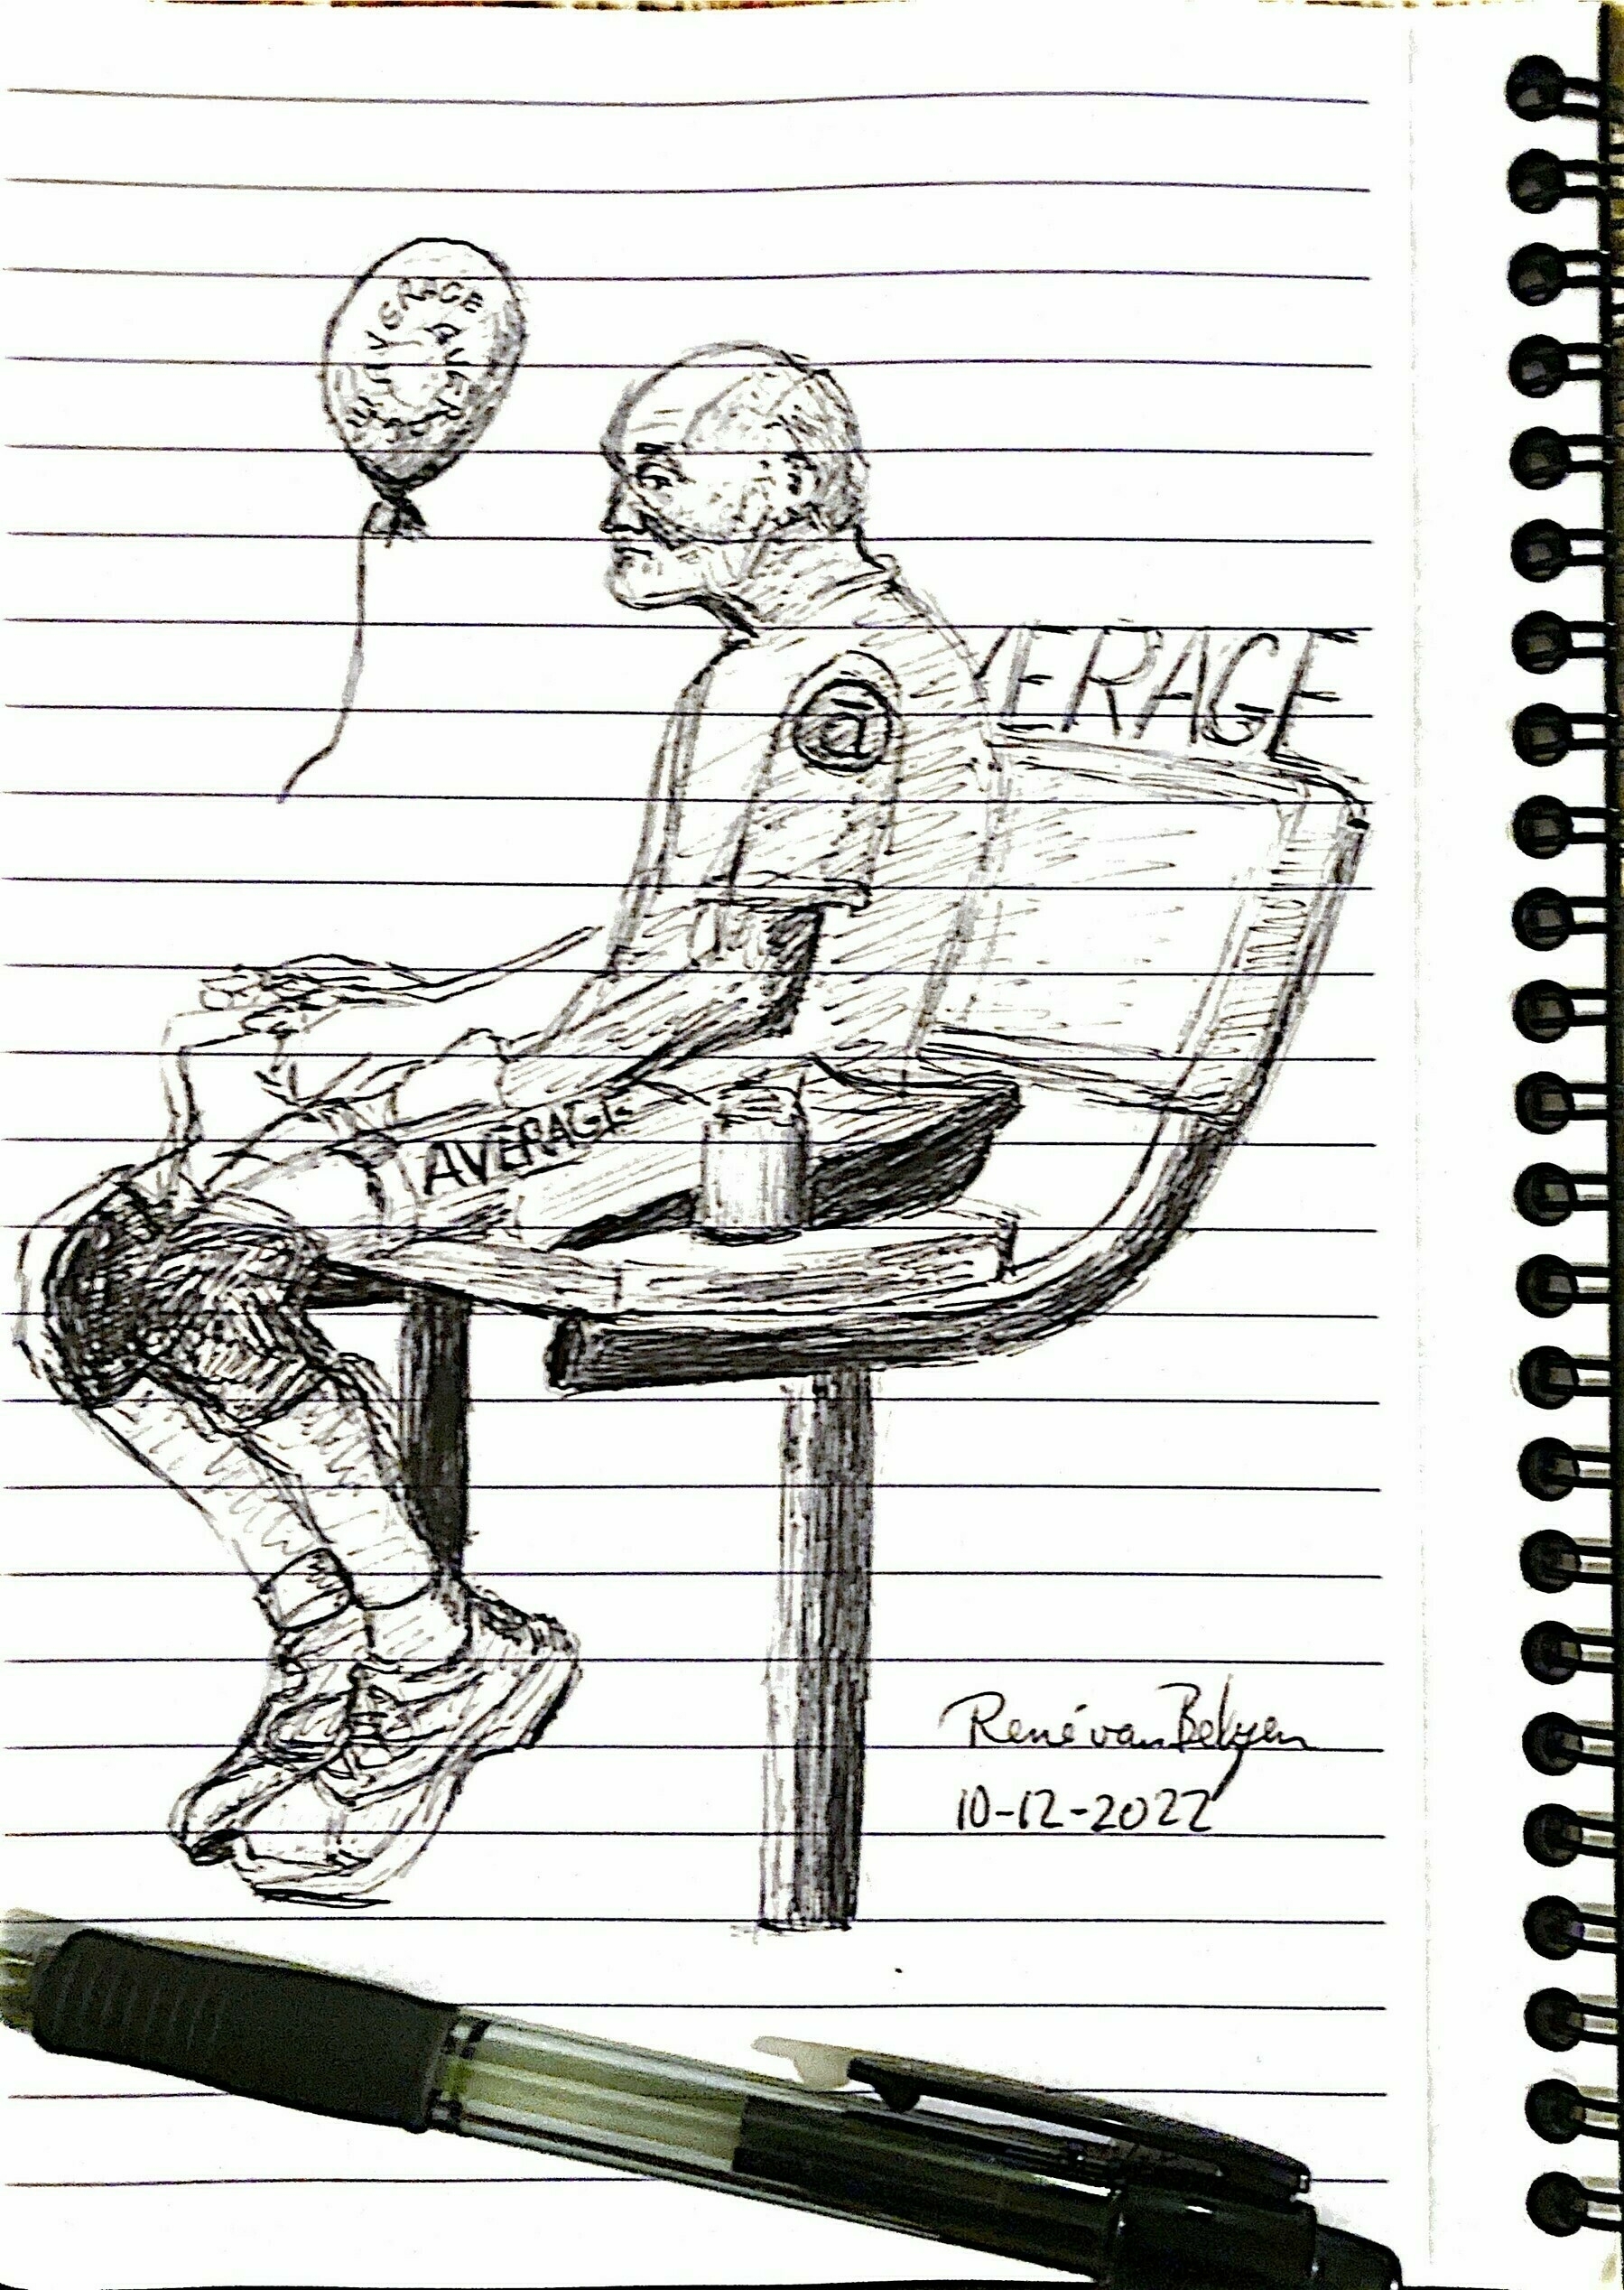 ballpoint pen sketch of older runner sitting on a bench